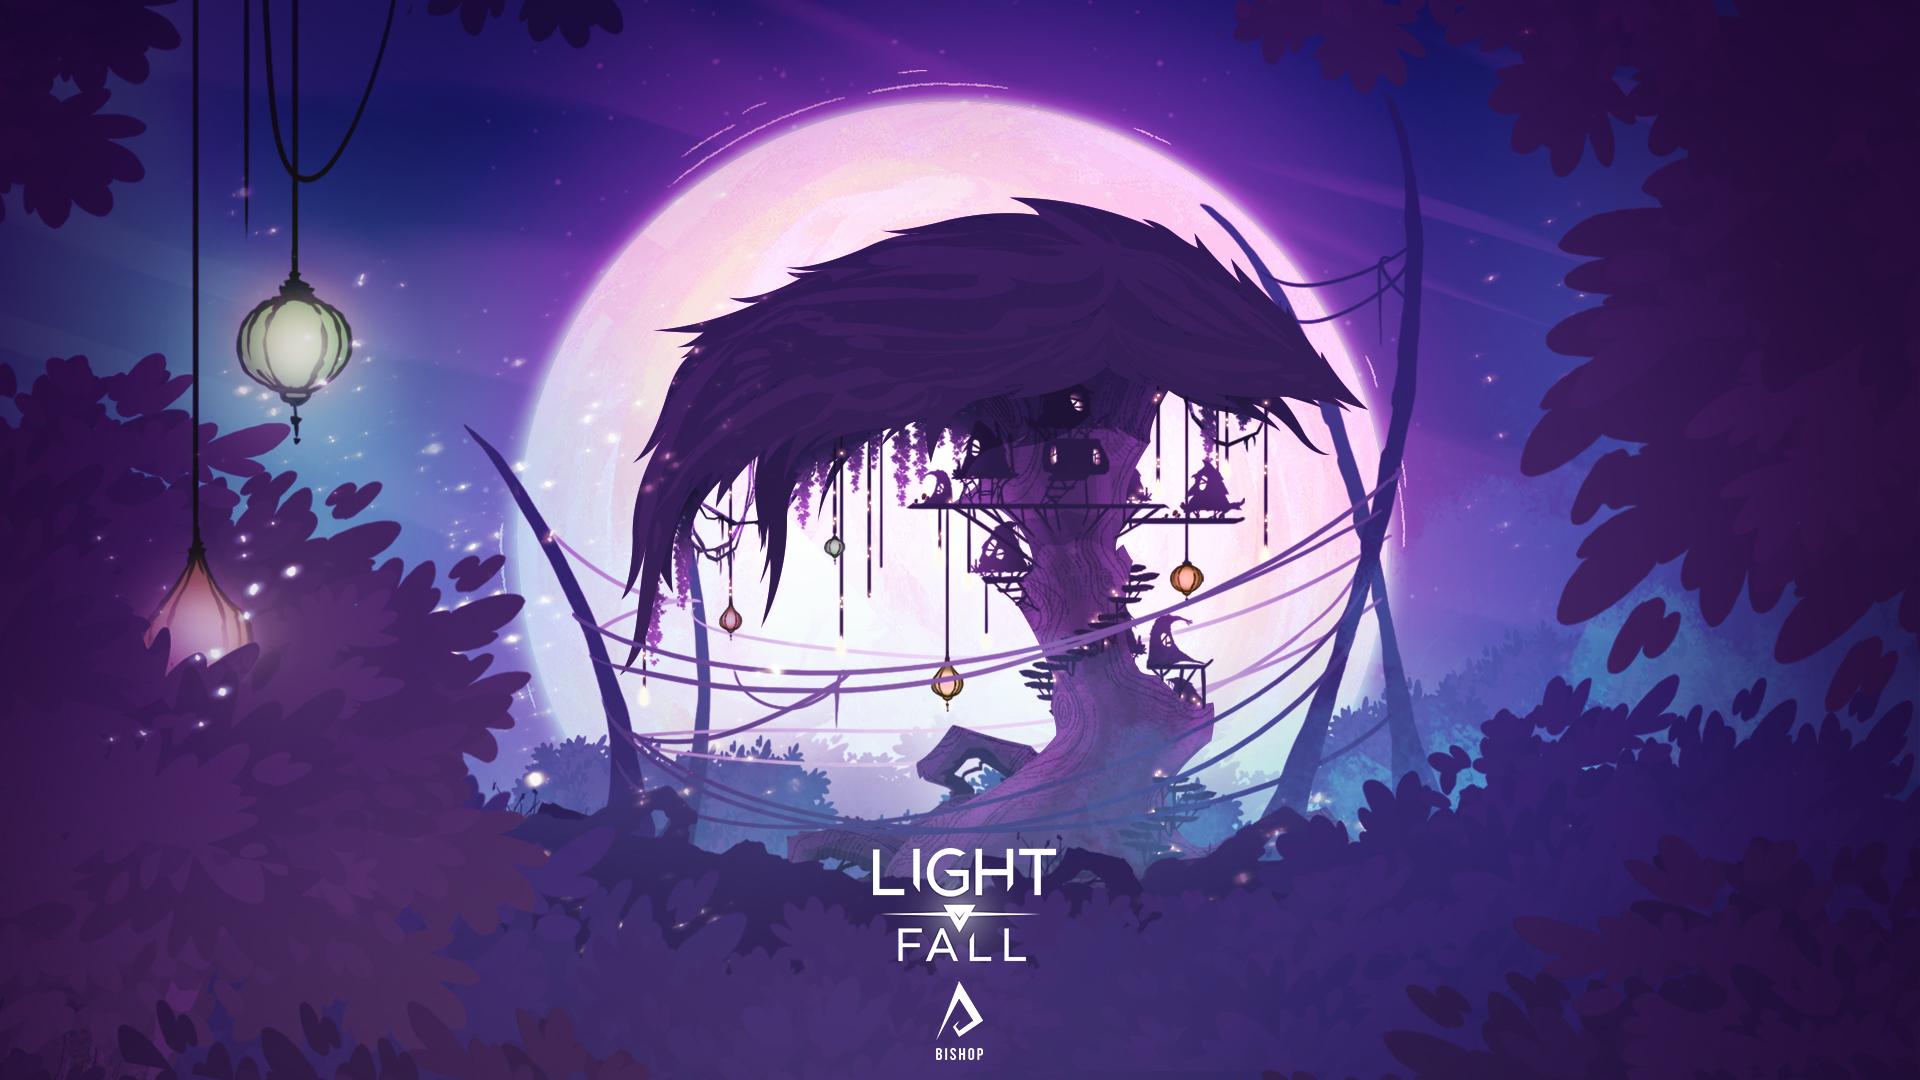 Light Fall (2018) promotional art